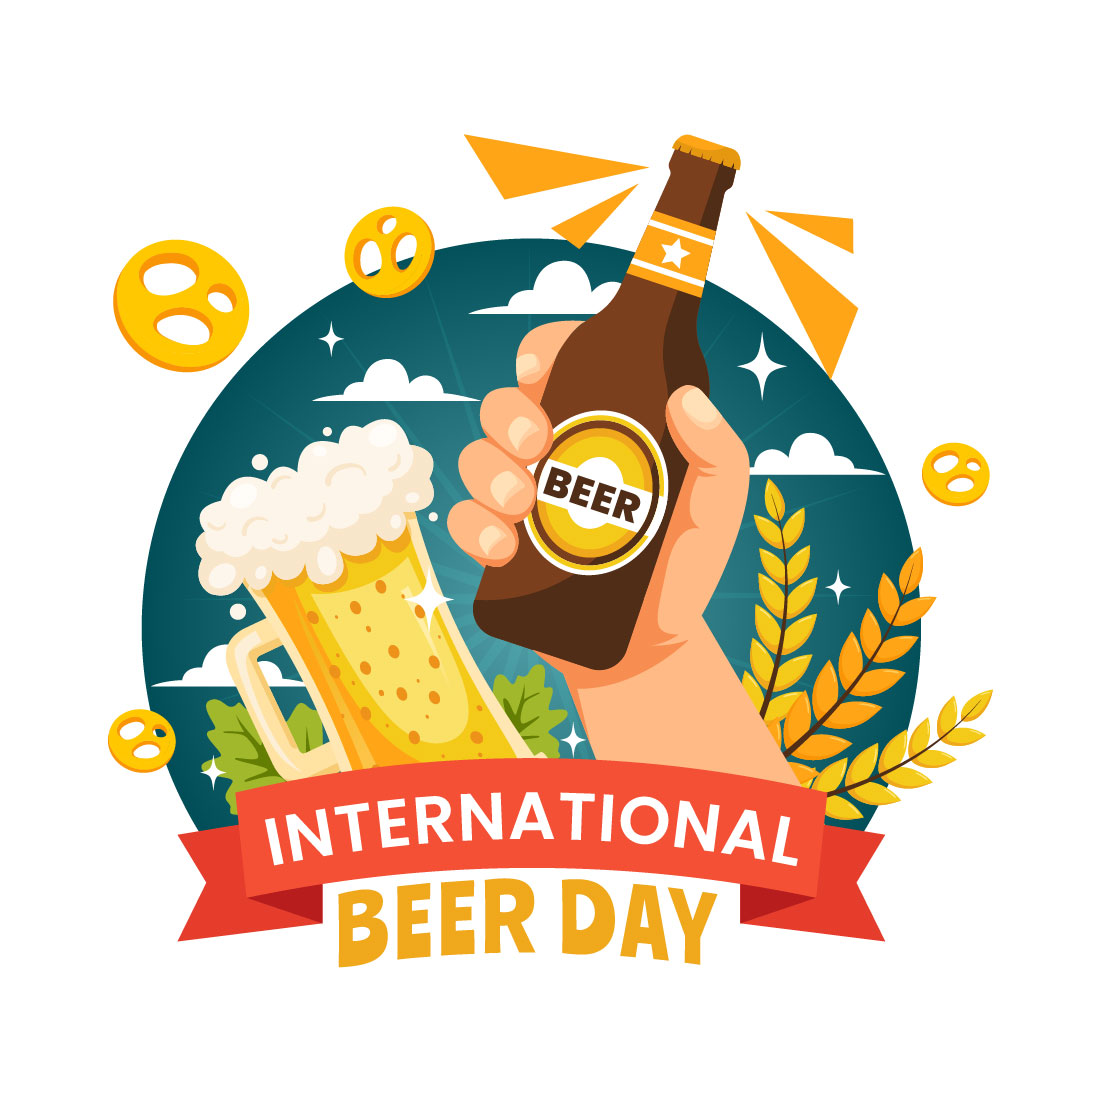 12 International Beer Day Illustration preview image.